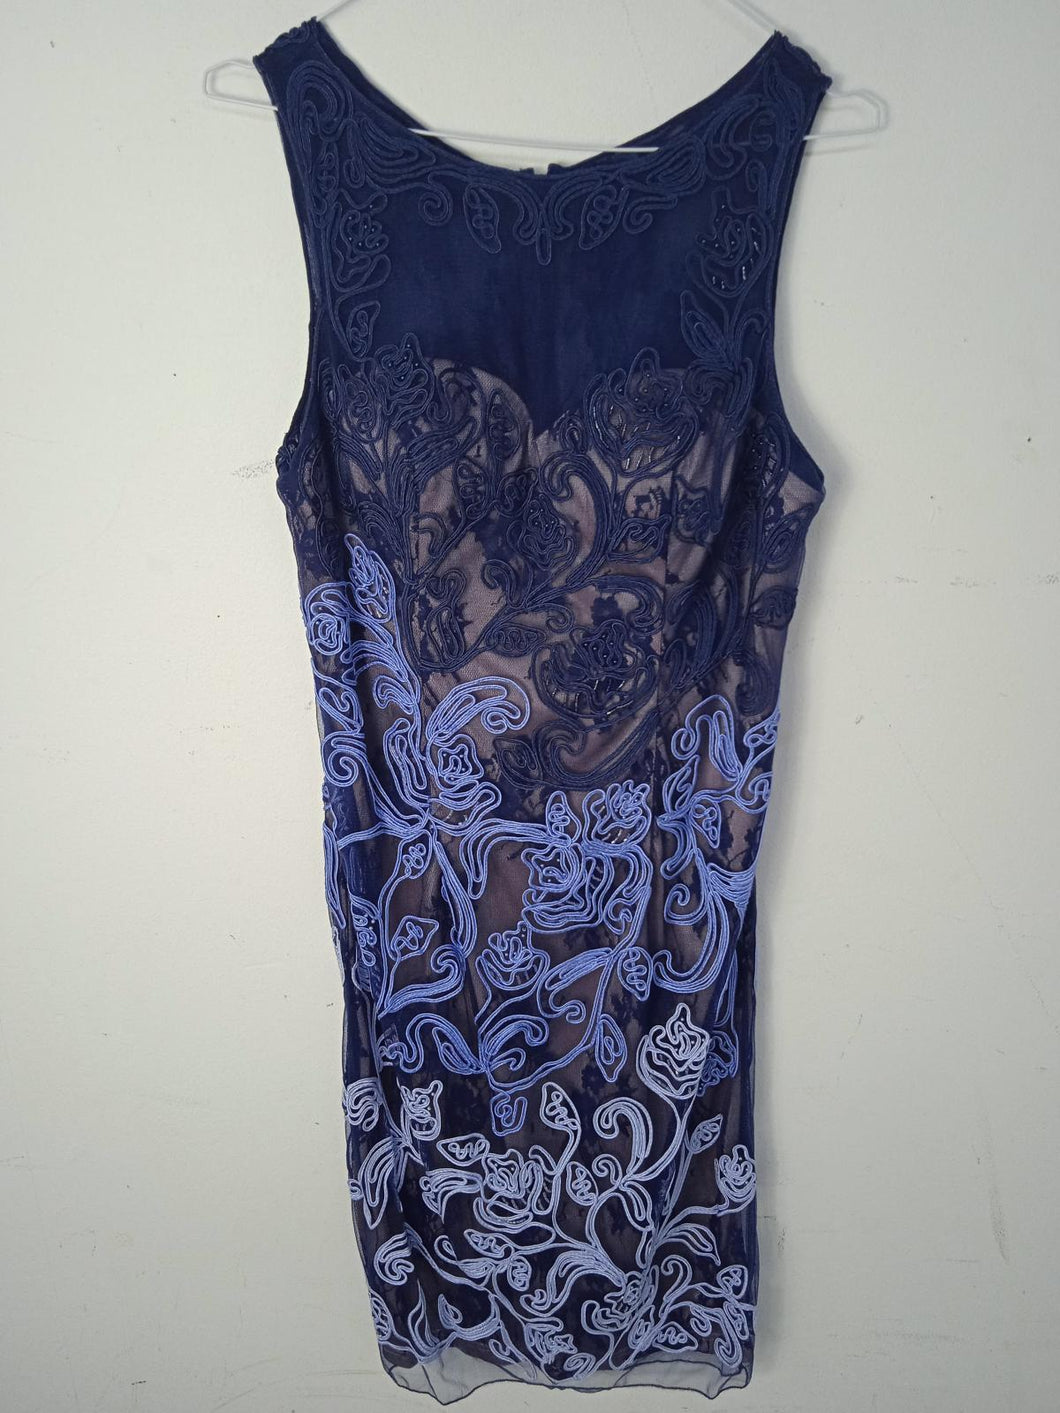 SOCIAL OCCASIONS Ladies Blue Floral Piping Sleeveless Shift Dress EU36 UK8 BNWT